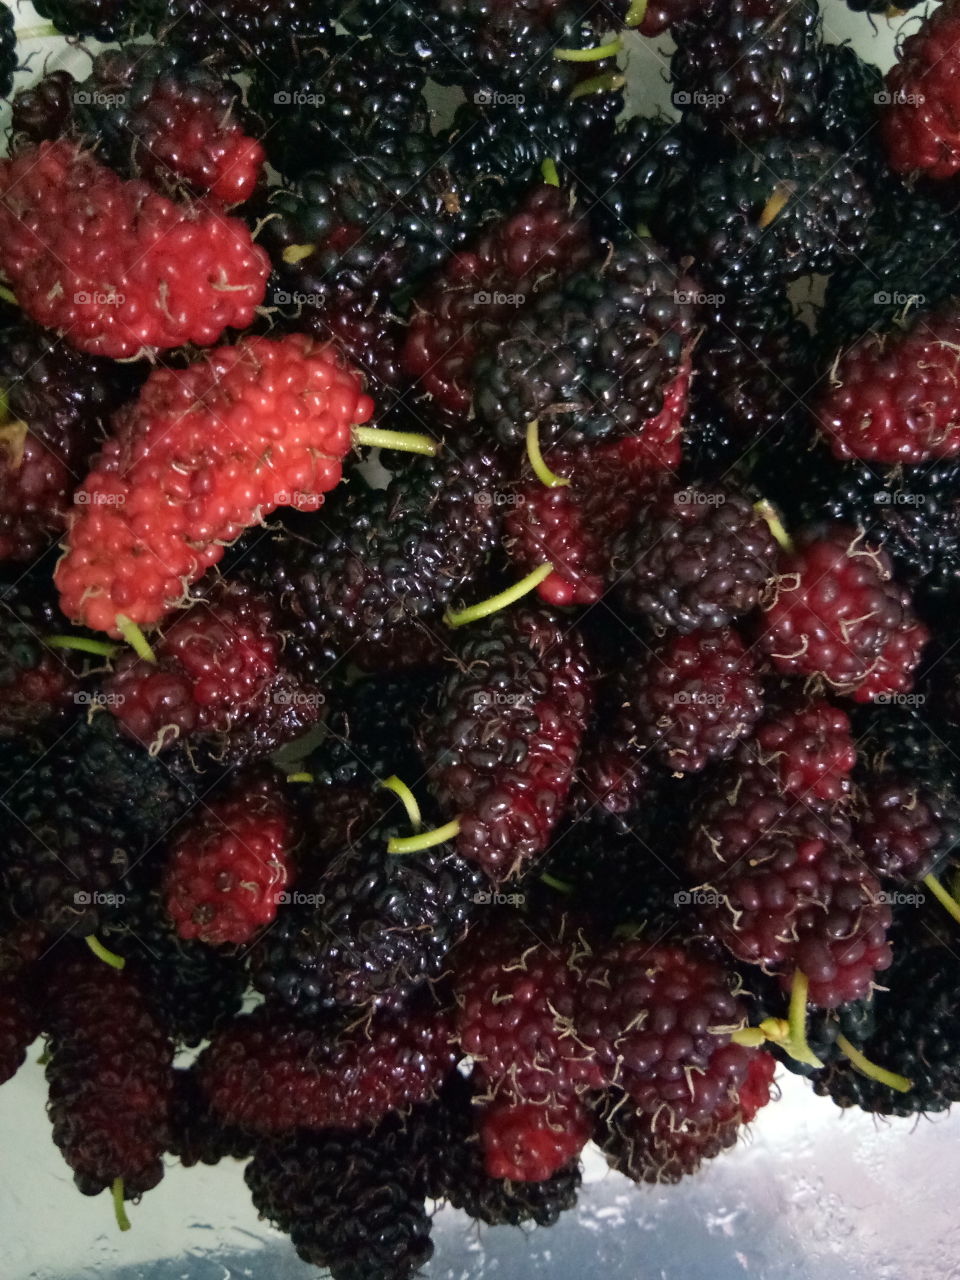 mulberry
food
good
health
slim
red
black